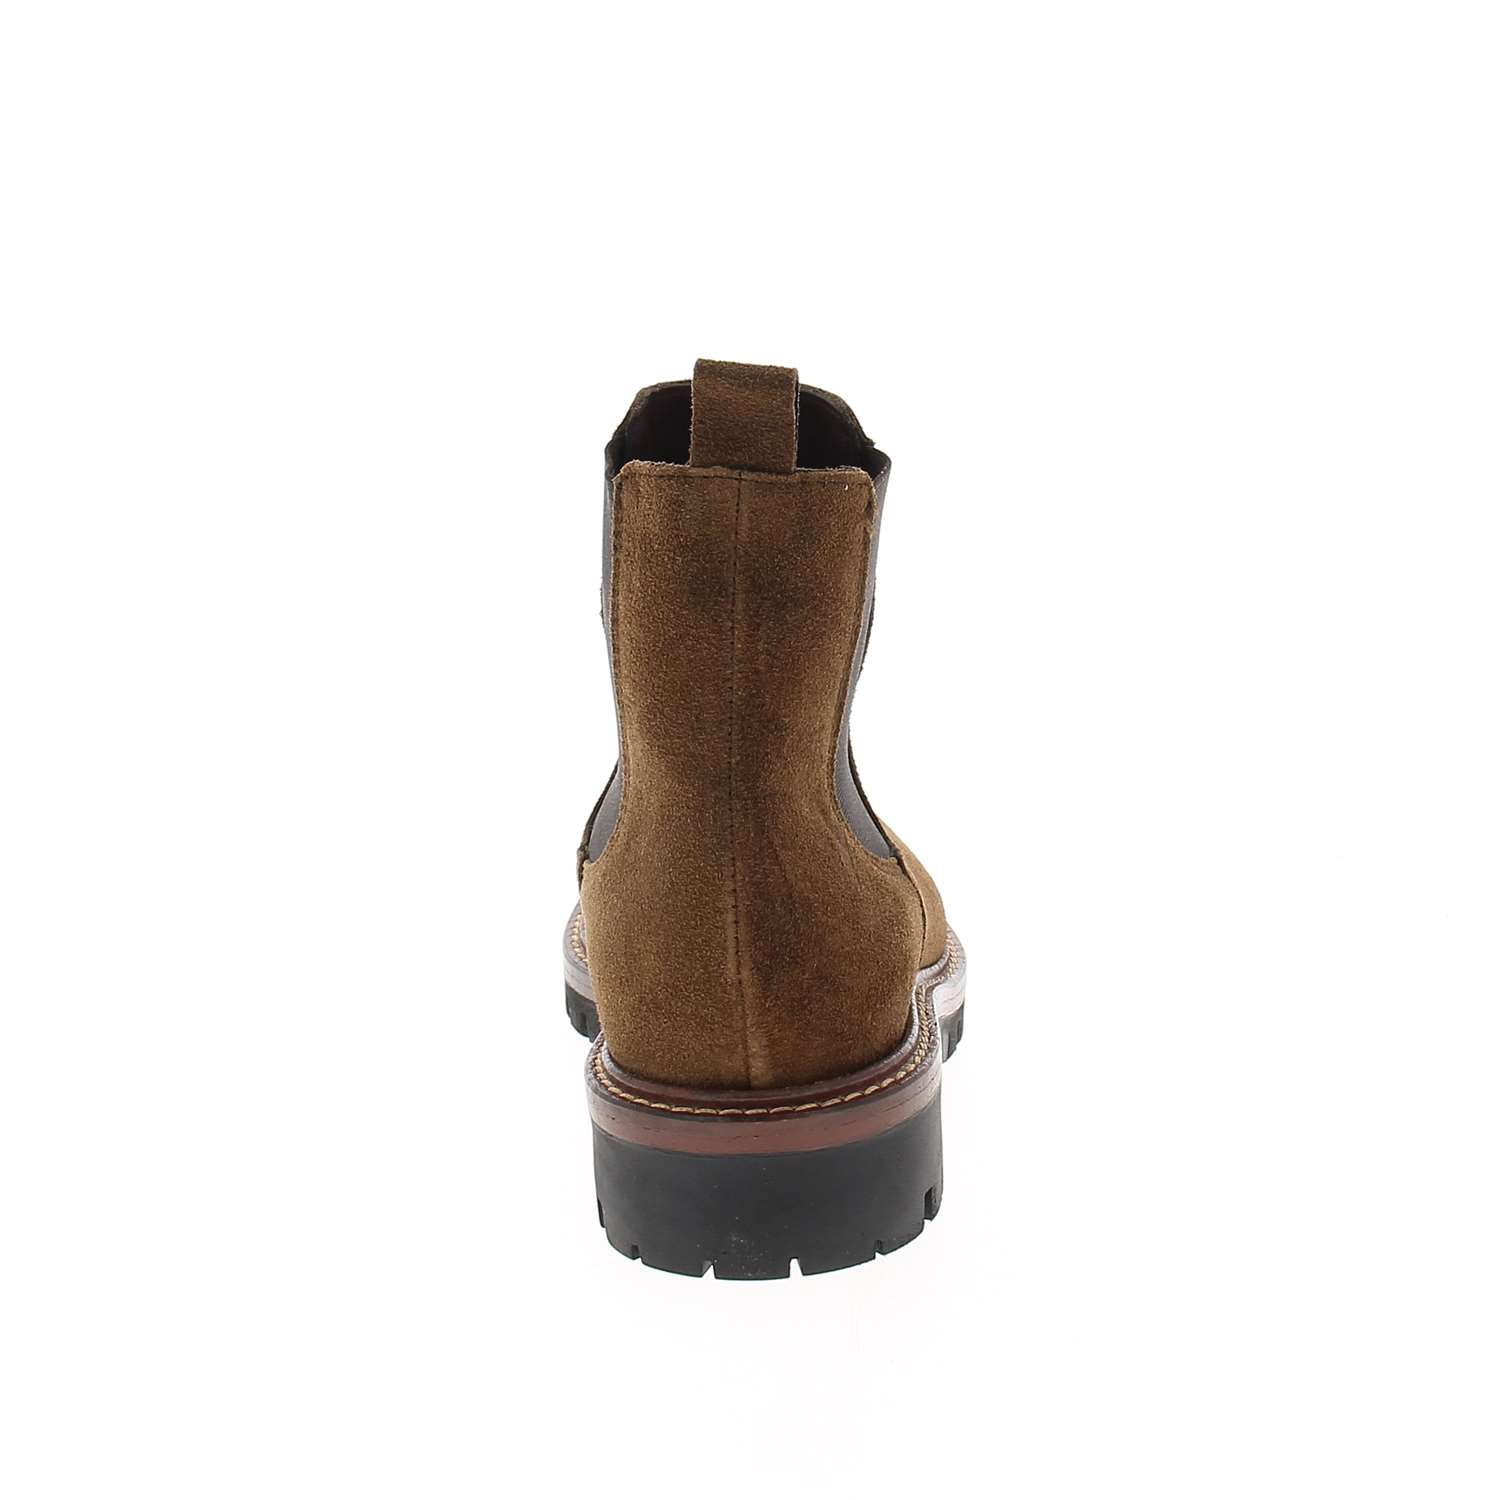 04 - ALNERO - ALPE - Boots et bottines - Croûte de cuir